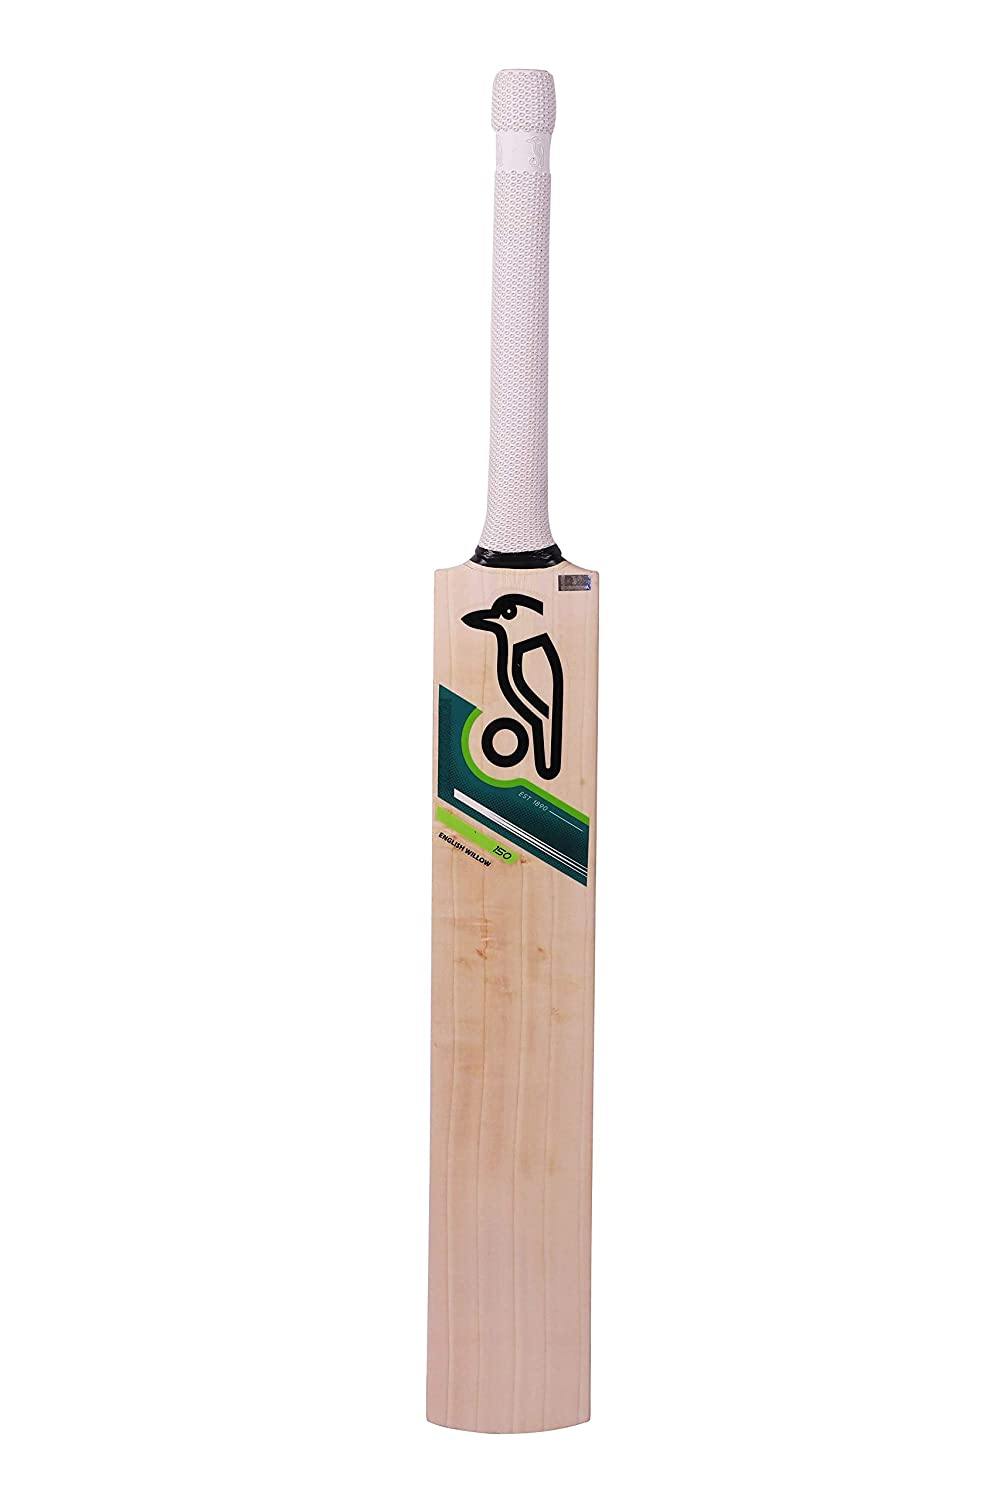 Kookaburra Kahuna 150 English Willow Cricket Bat - Best Price online Prokicksports.com